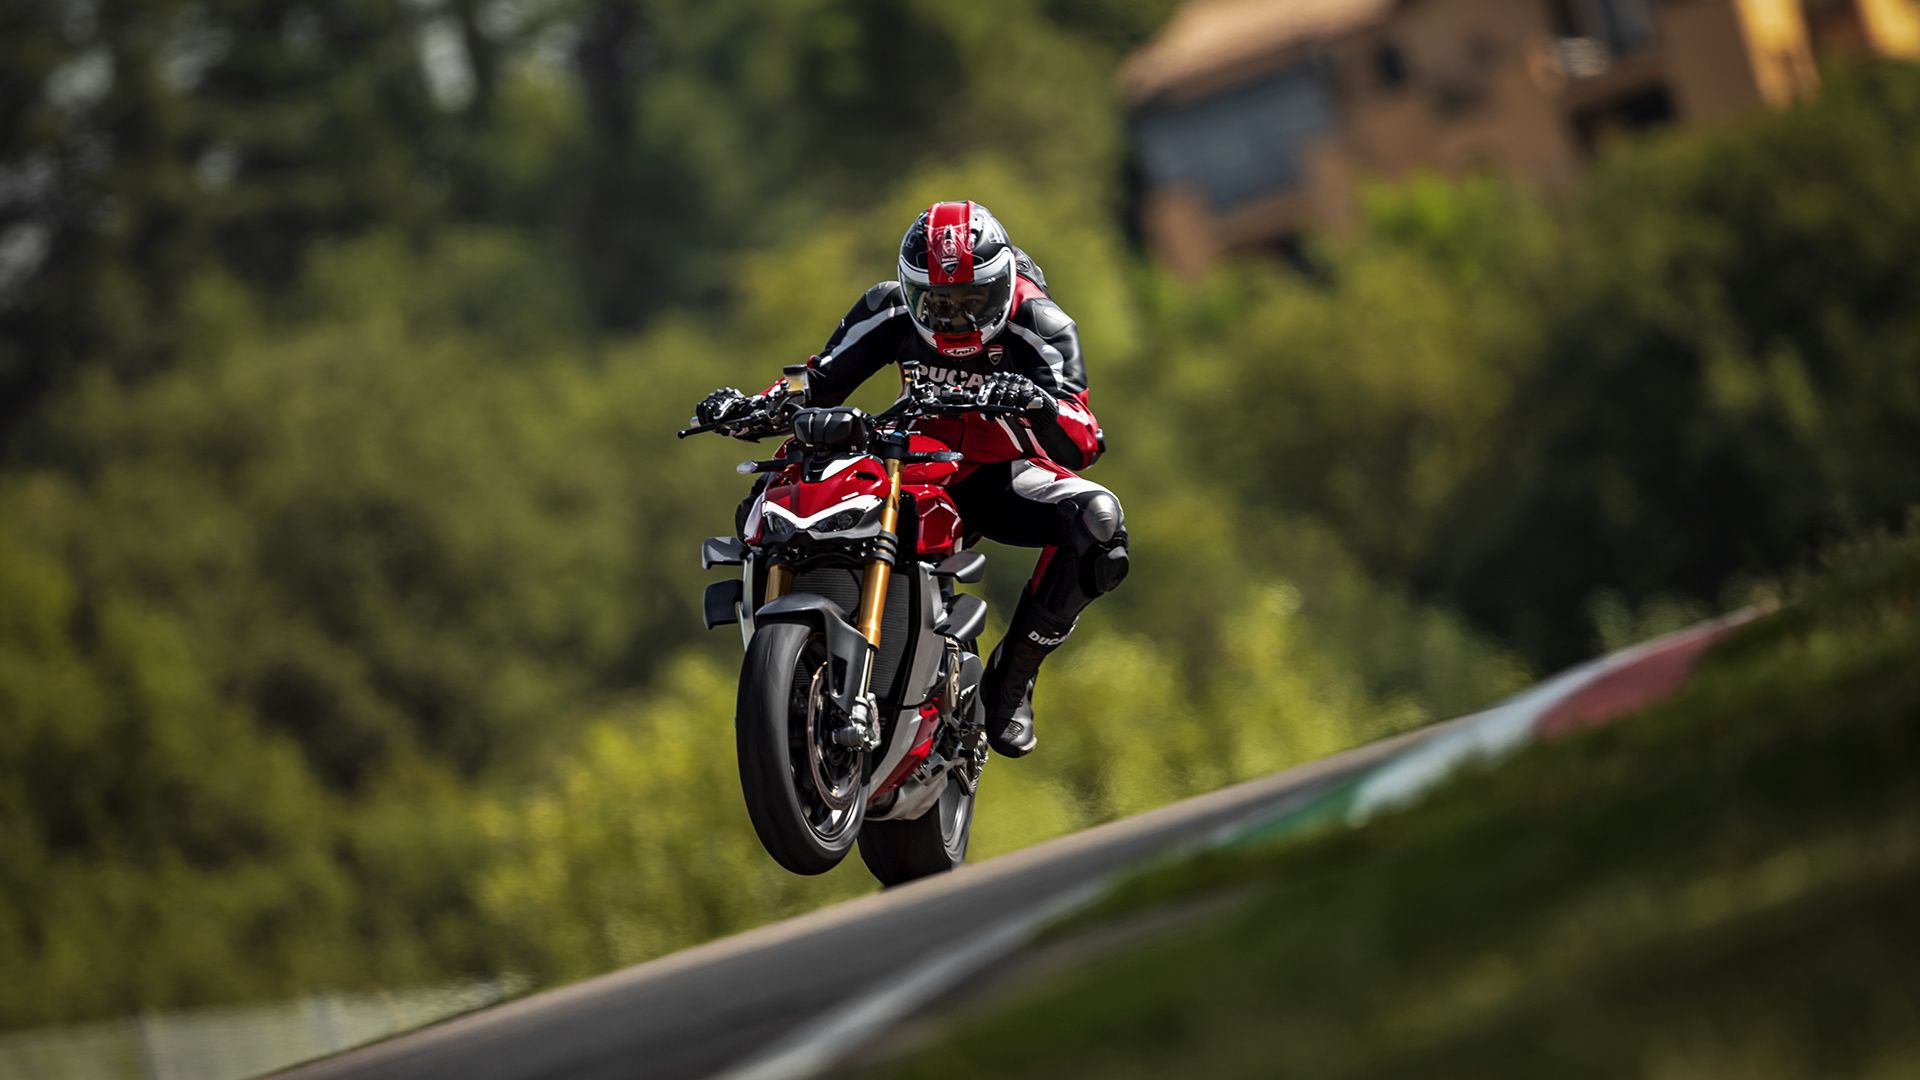 2020 Ducati Streetfighter V4 popping a wheelie